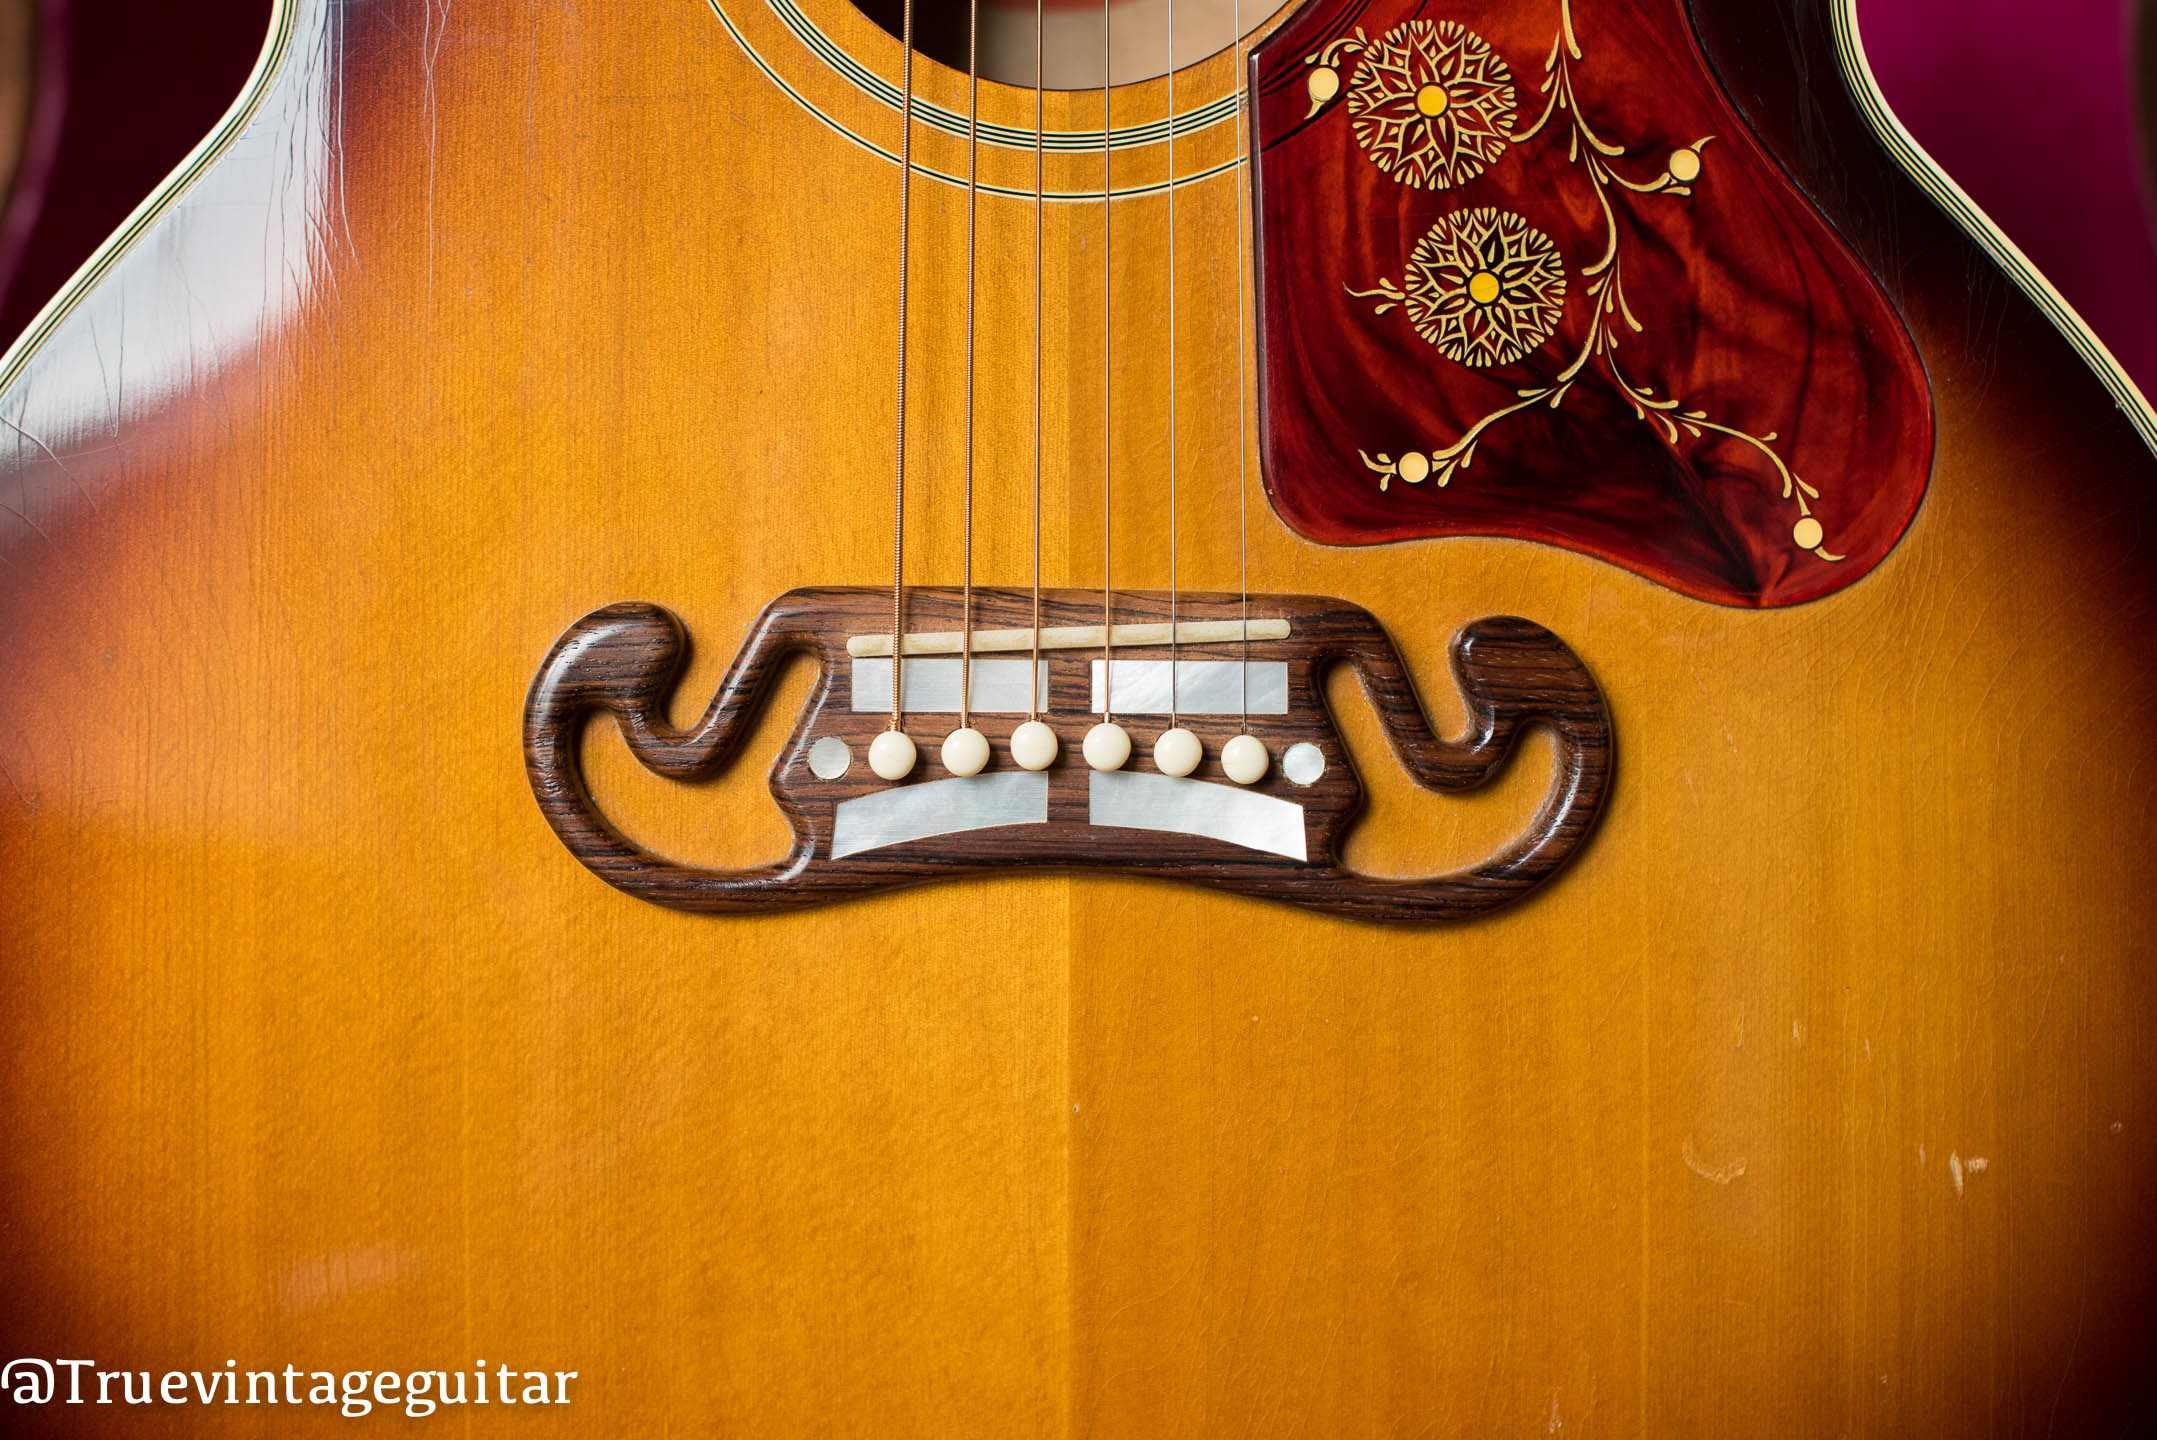 Vintage 1958 Gibson J-200 acoustic guitar – True Vintage Guitar